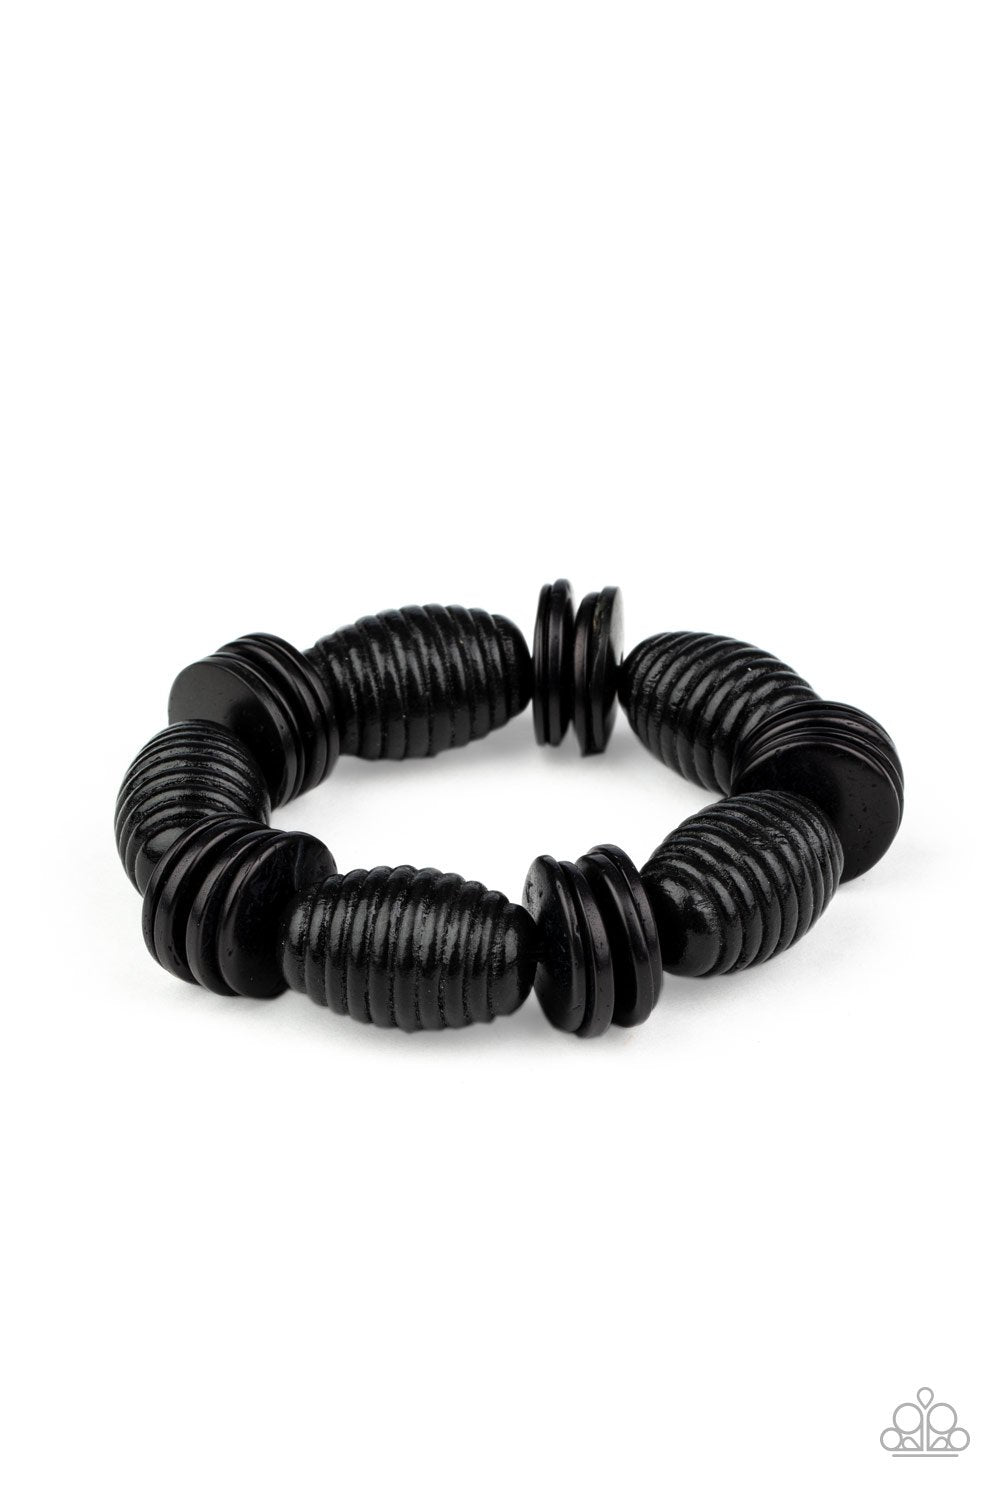 Caribbean Castaway Black Wood Bracelet - Paparazzi Accessories-CarasShop.com - $5 Jewelry by Cara Jewels